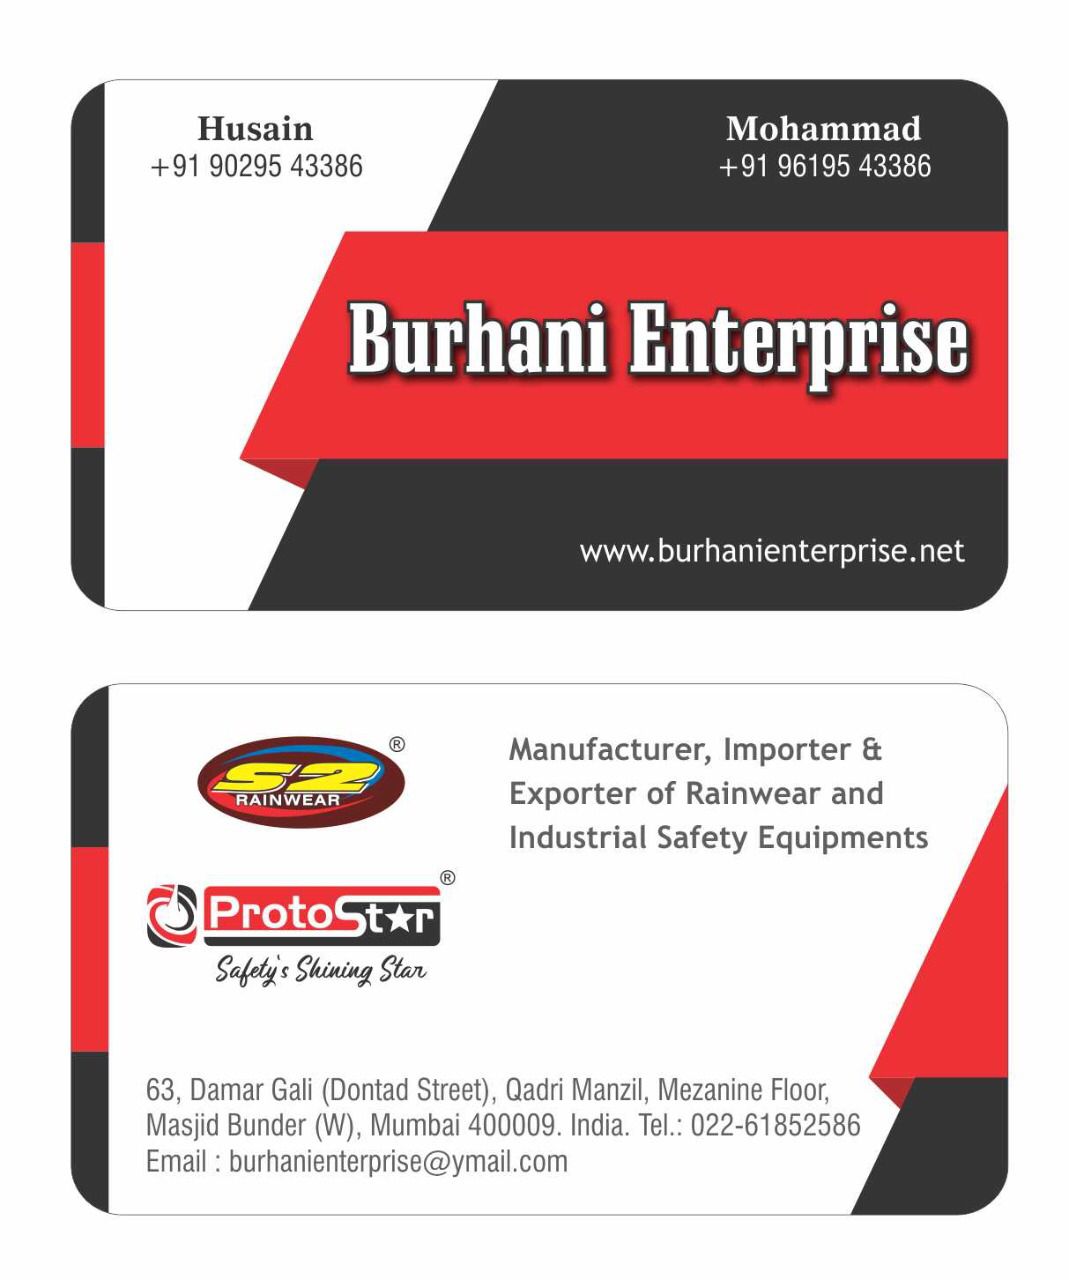 Burhani Enterprise